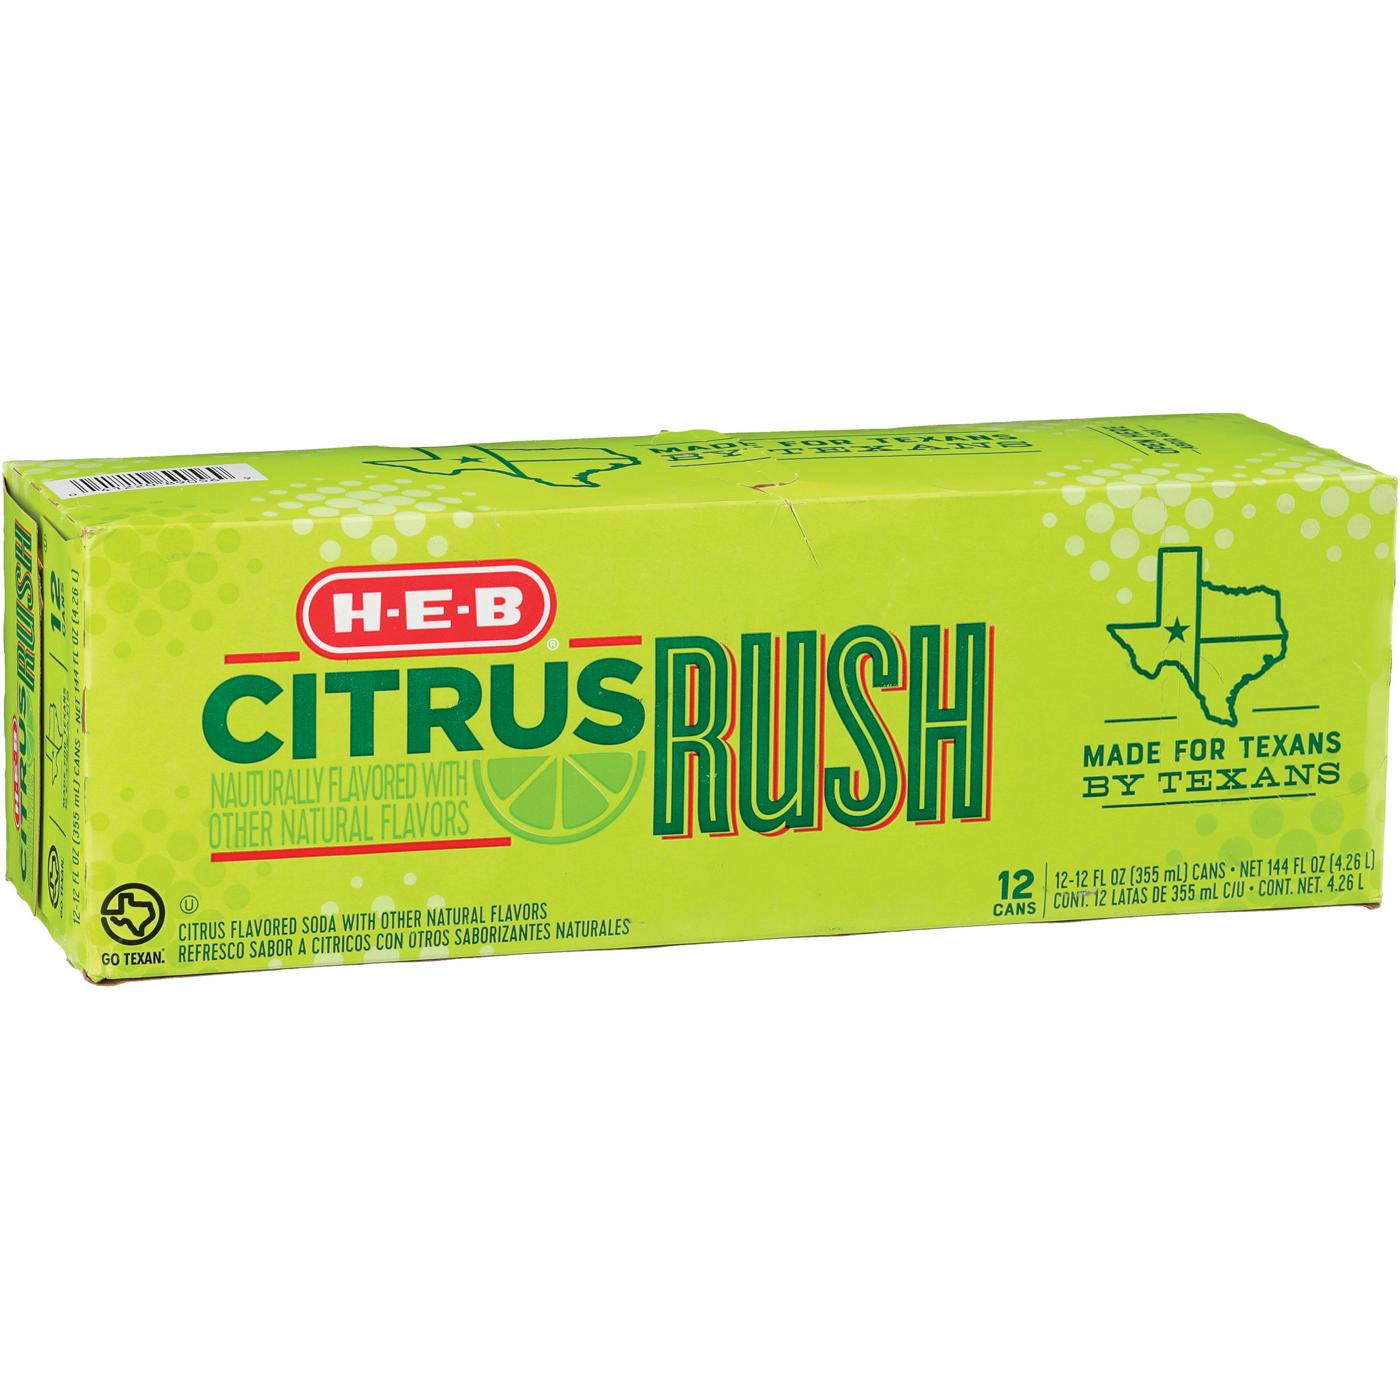 H-E-B Citrus Rush Soda 12 pk Cans; image 2 of 2